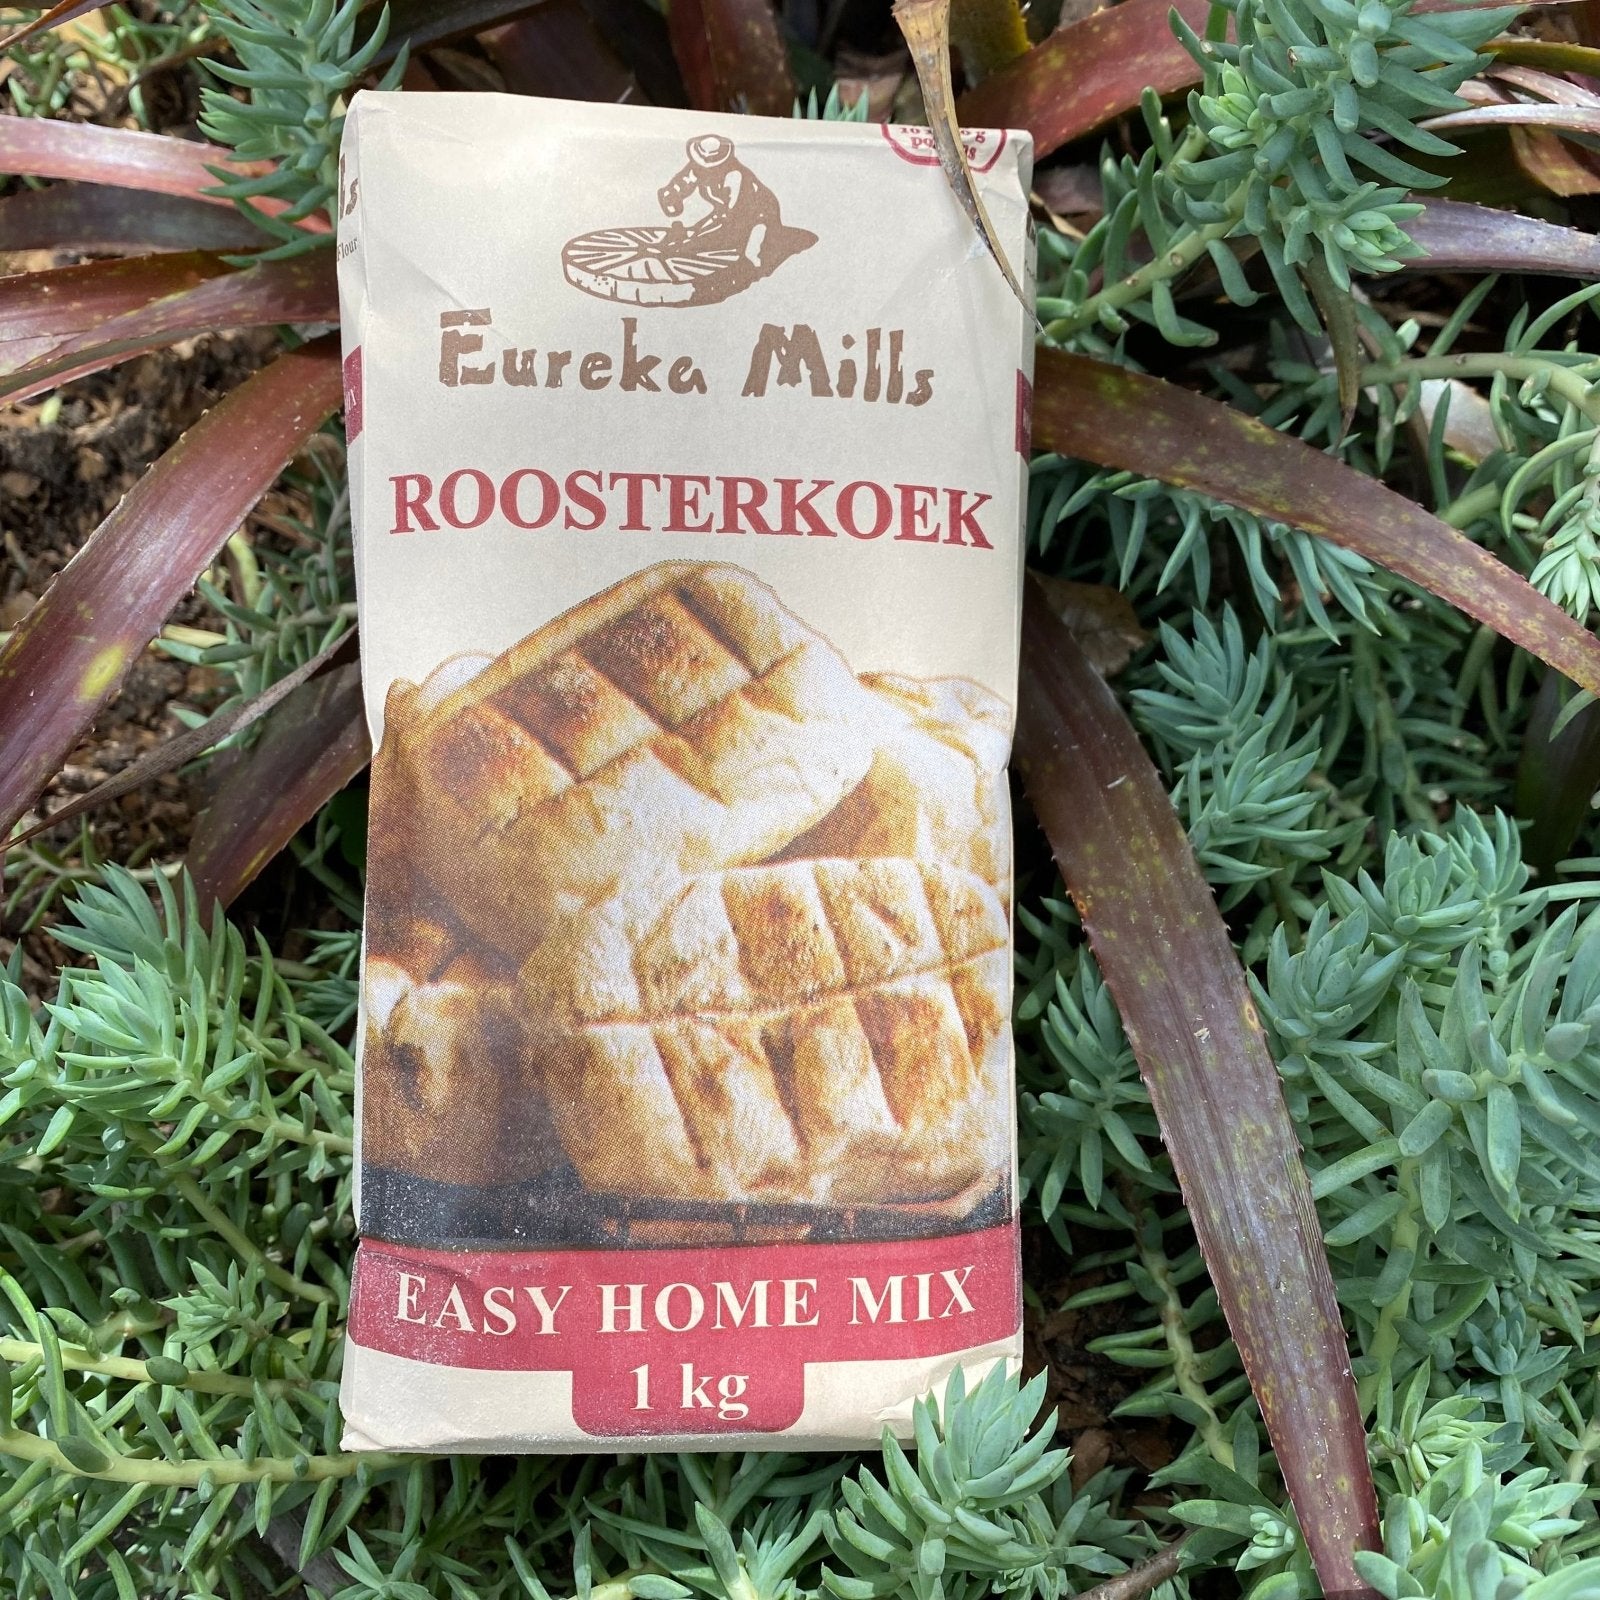 Eureka Mills Stone Ground Roosterkoek Easy Home Mix (1kg) - The Deli